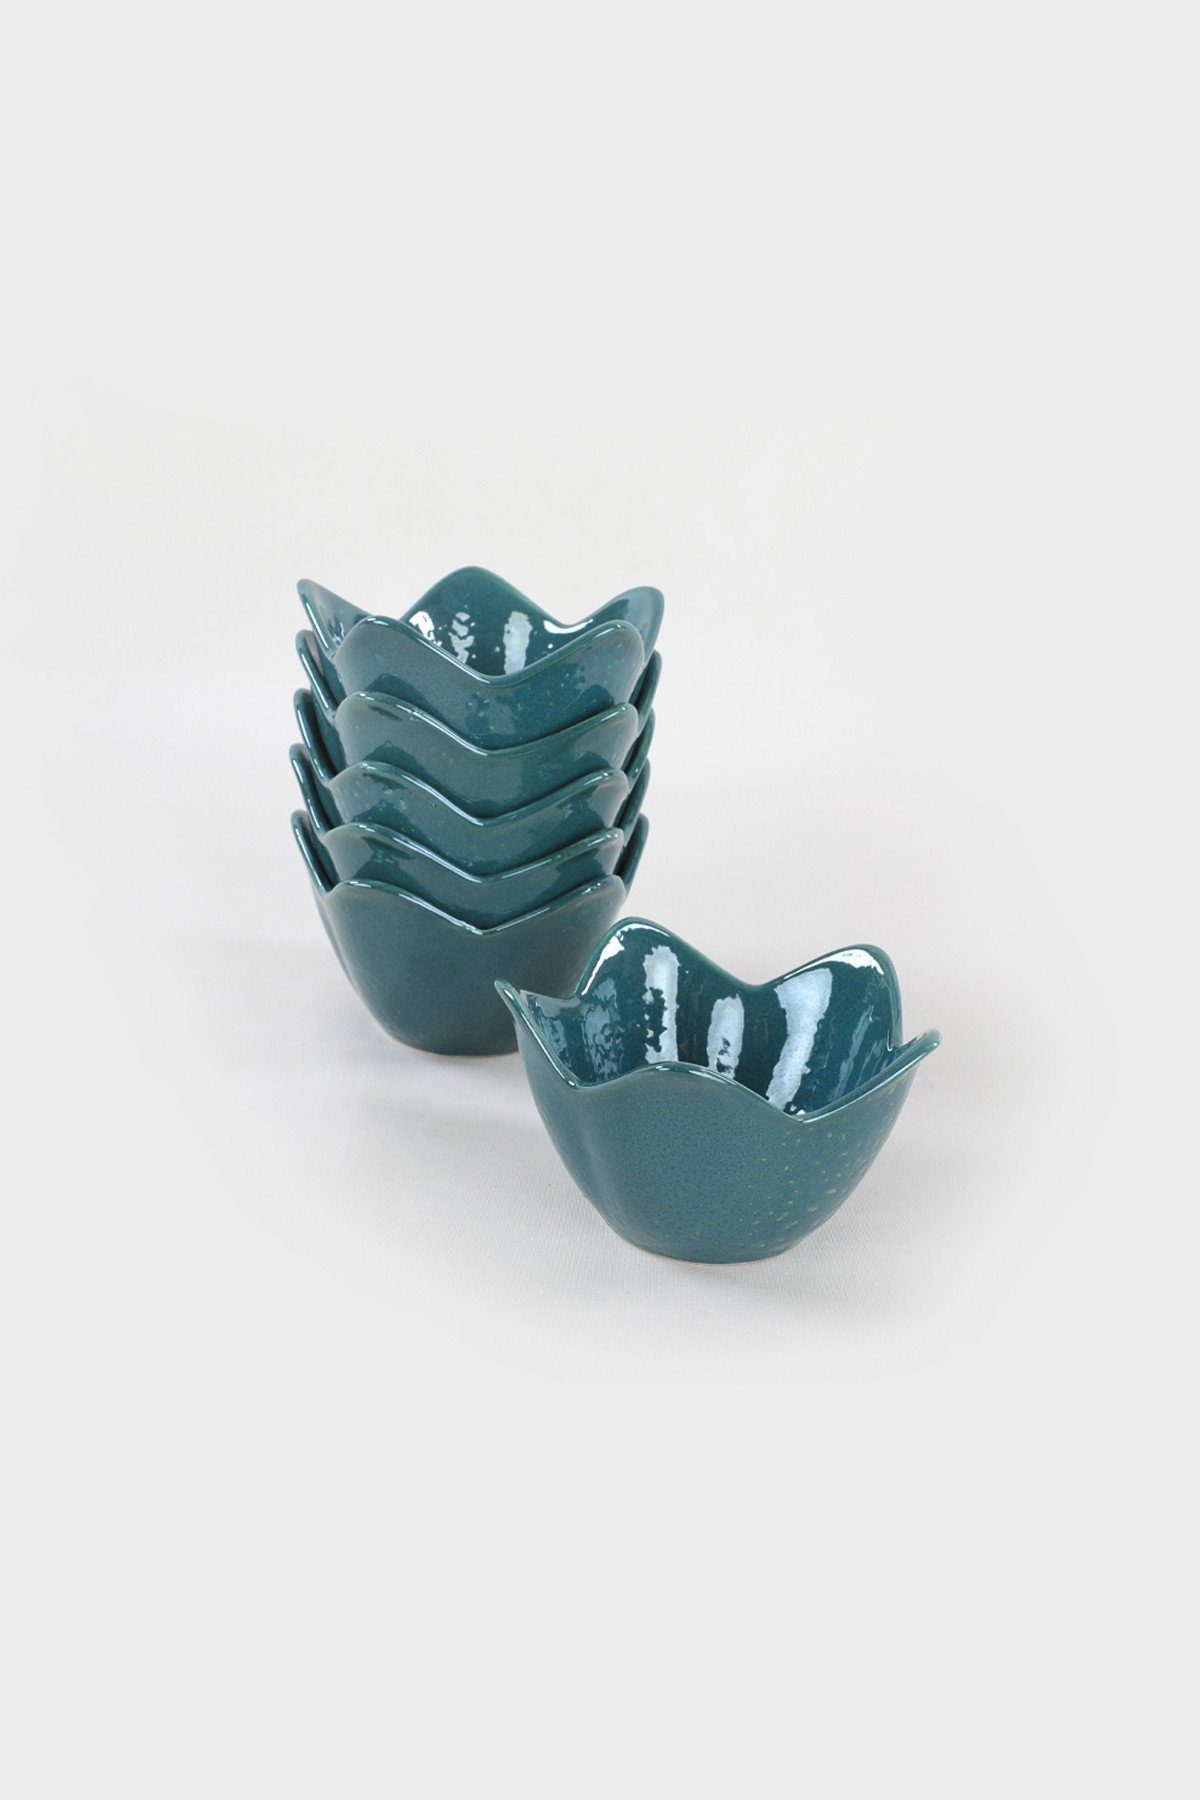 Hermia Dunkelgrün, Schüsseln, Schüssel 100% KRM1211, Keramik Concept